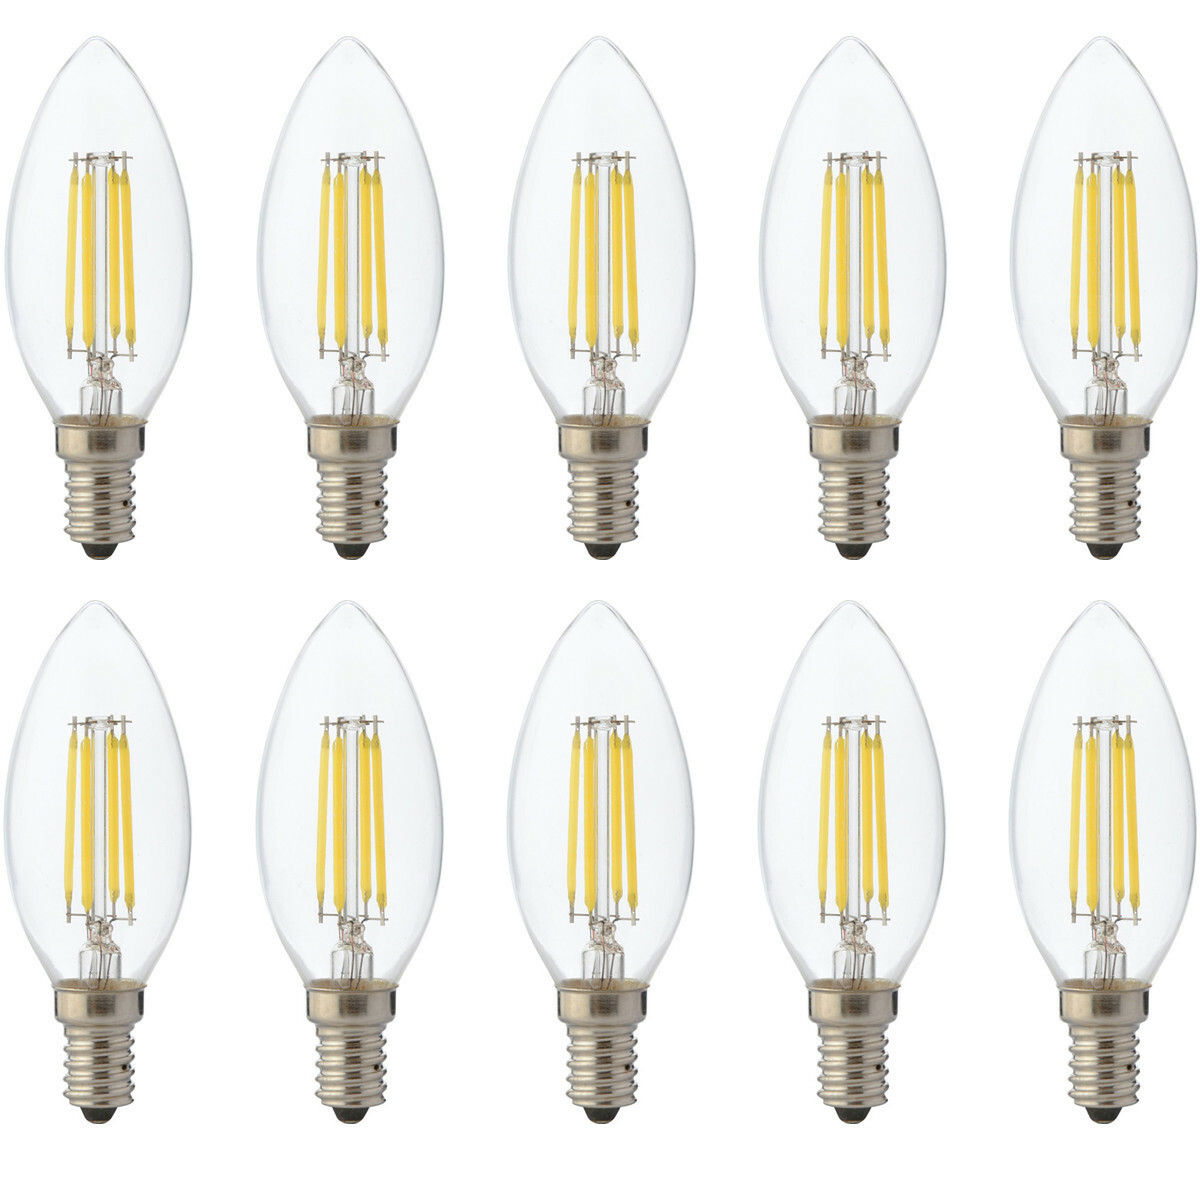 Oxide Uitbreiding bezoeker Voordeelpak LED Lamp 10 Pack - Kaarslamp - Filament - E14 Fitting - 6W  Dimbaar - Warm Wit 2700K | BES LED